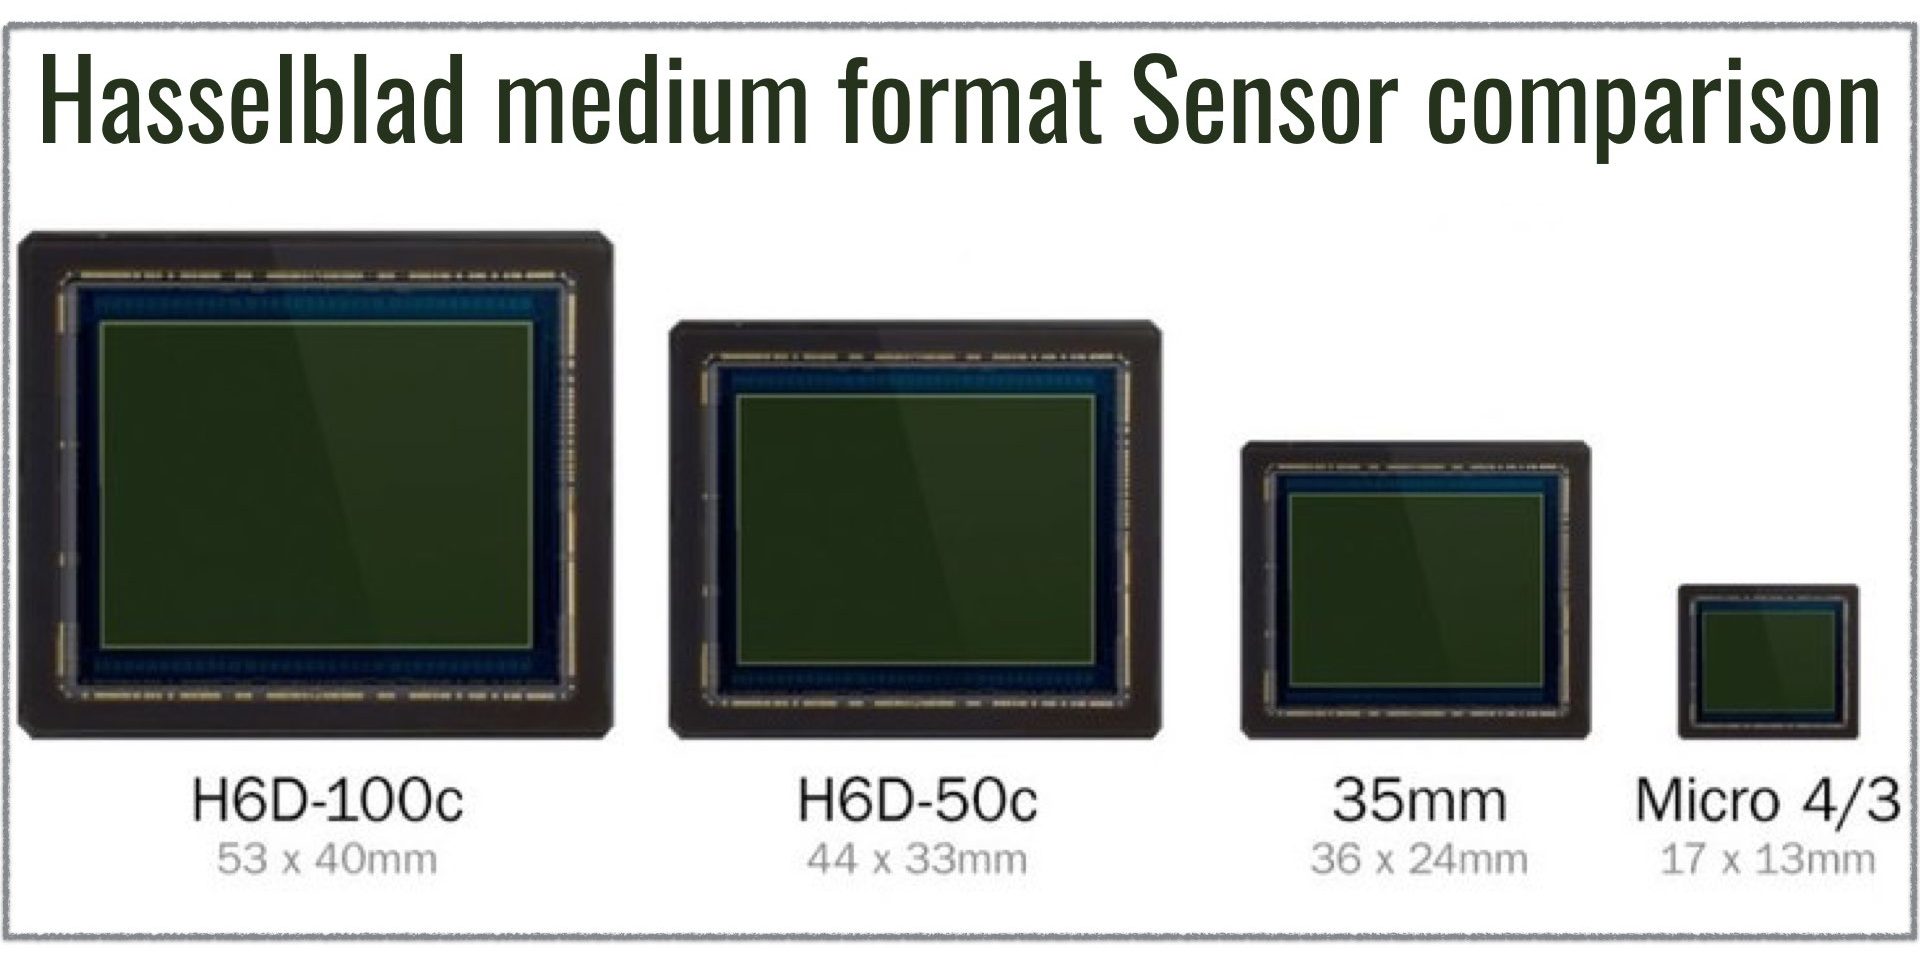 Medium format sensor comparison